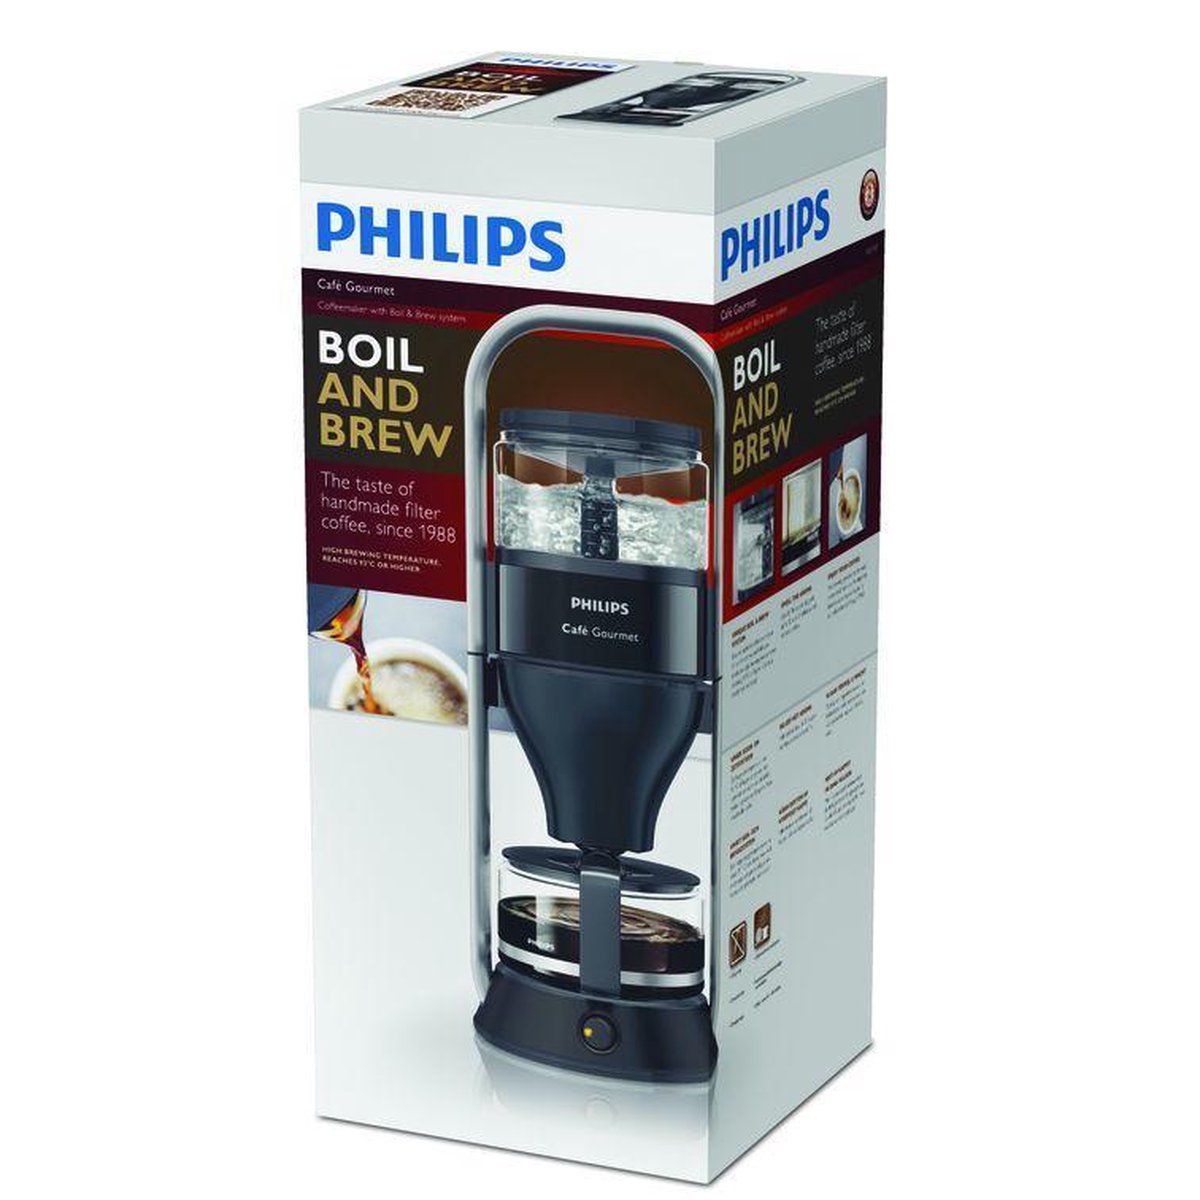 Overjas tandarts lof Philips Café Gourmet HD5407/60 - Koffiezetapparaat - Zwart | bol.com